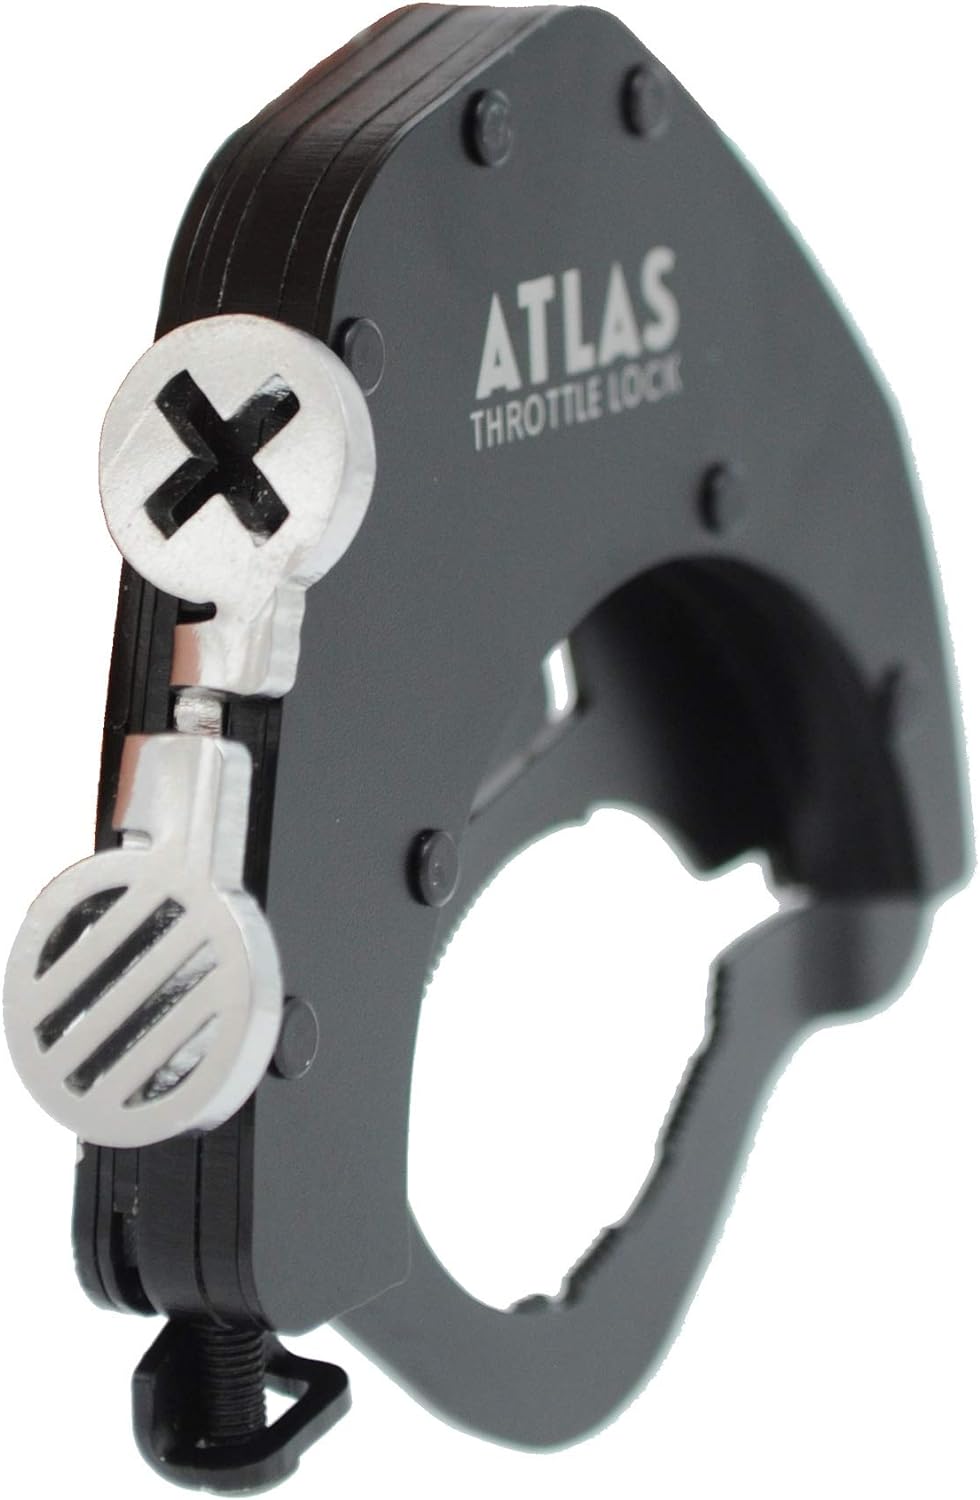 ATLAS Throttle Lock A Motorcycle Cruise Control Throttle Assist TOP KIT